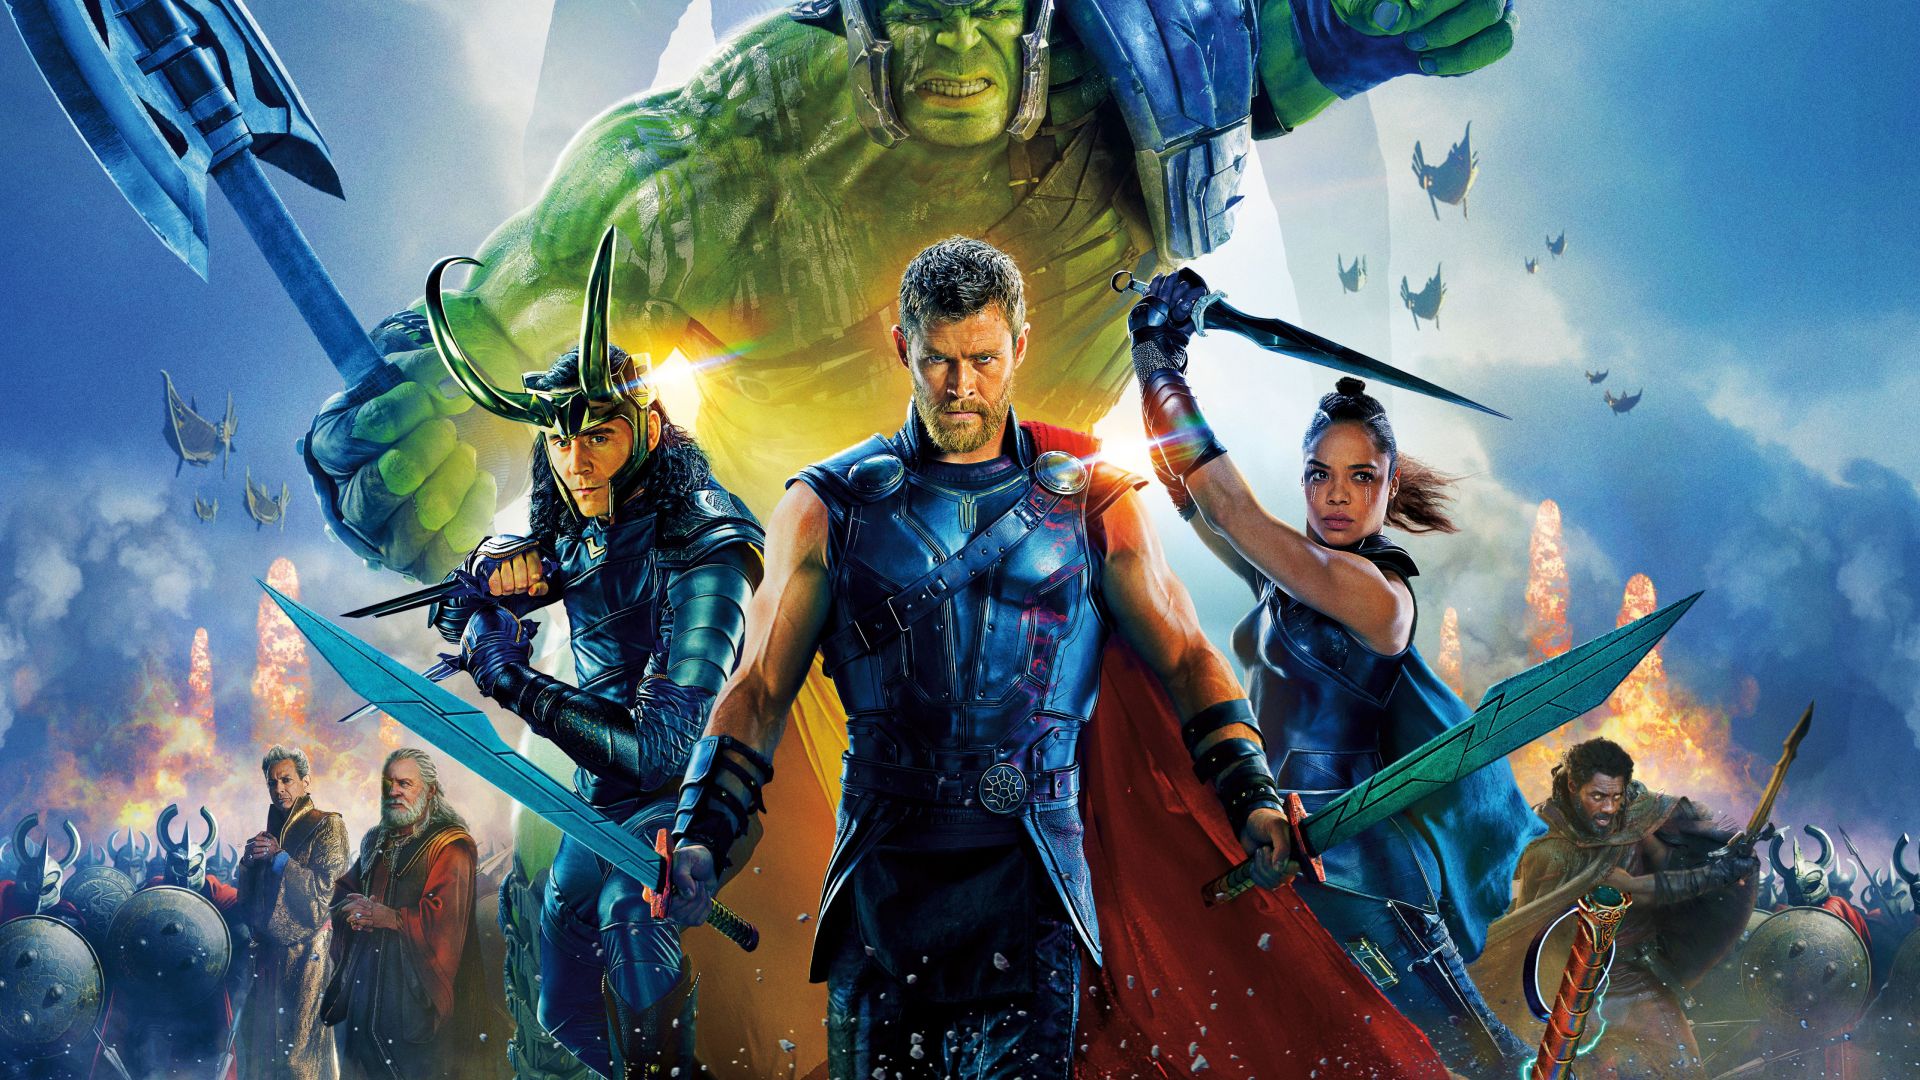 Тор 3: Рагнарек, Thor: Ragnarok, Chris Hemsworth, Tom Hiddleston, Tessa Thompson, poster, 5k (horizontal)